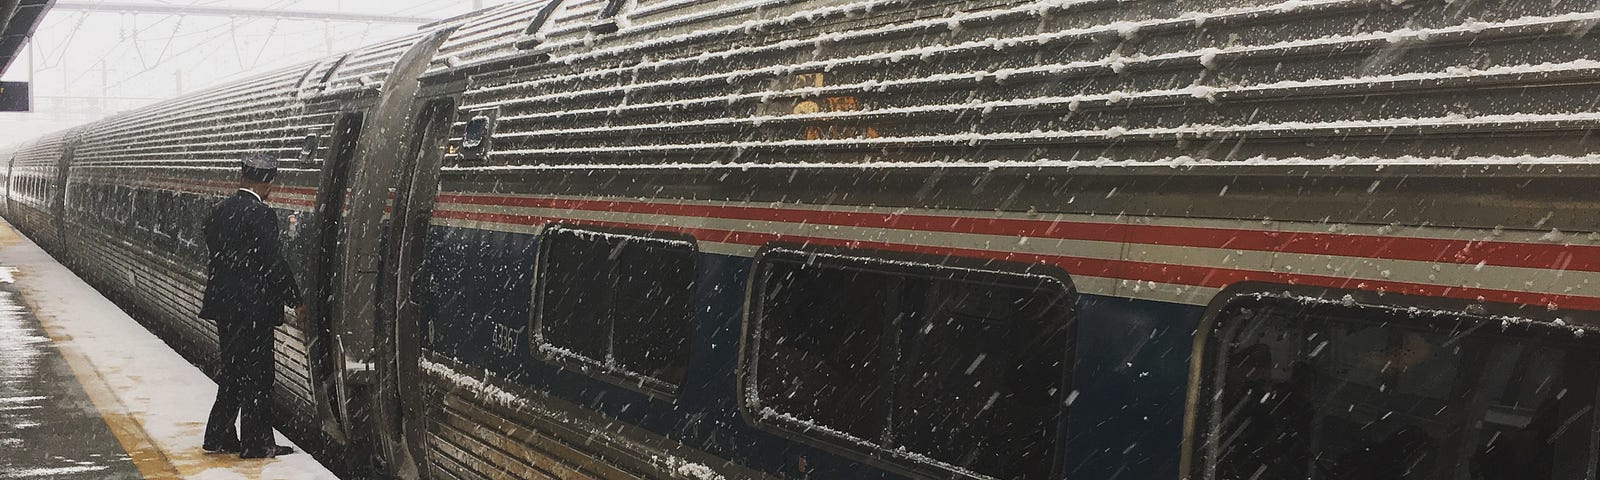 Snowy Amtrak platform.